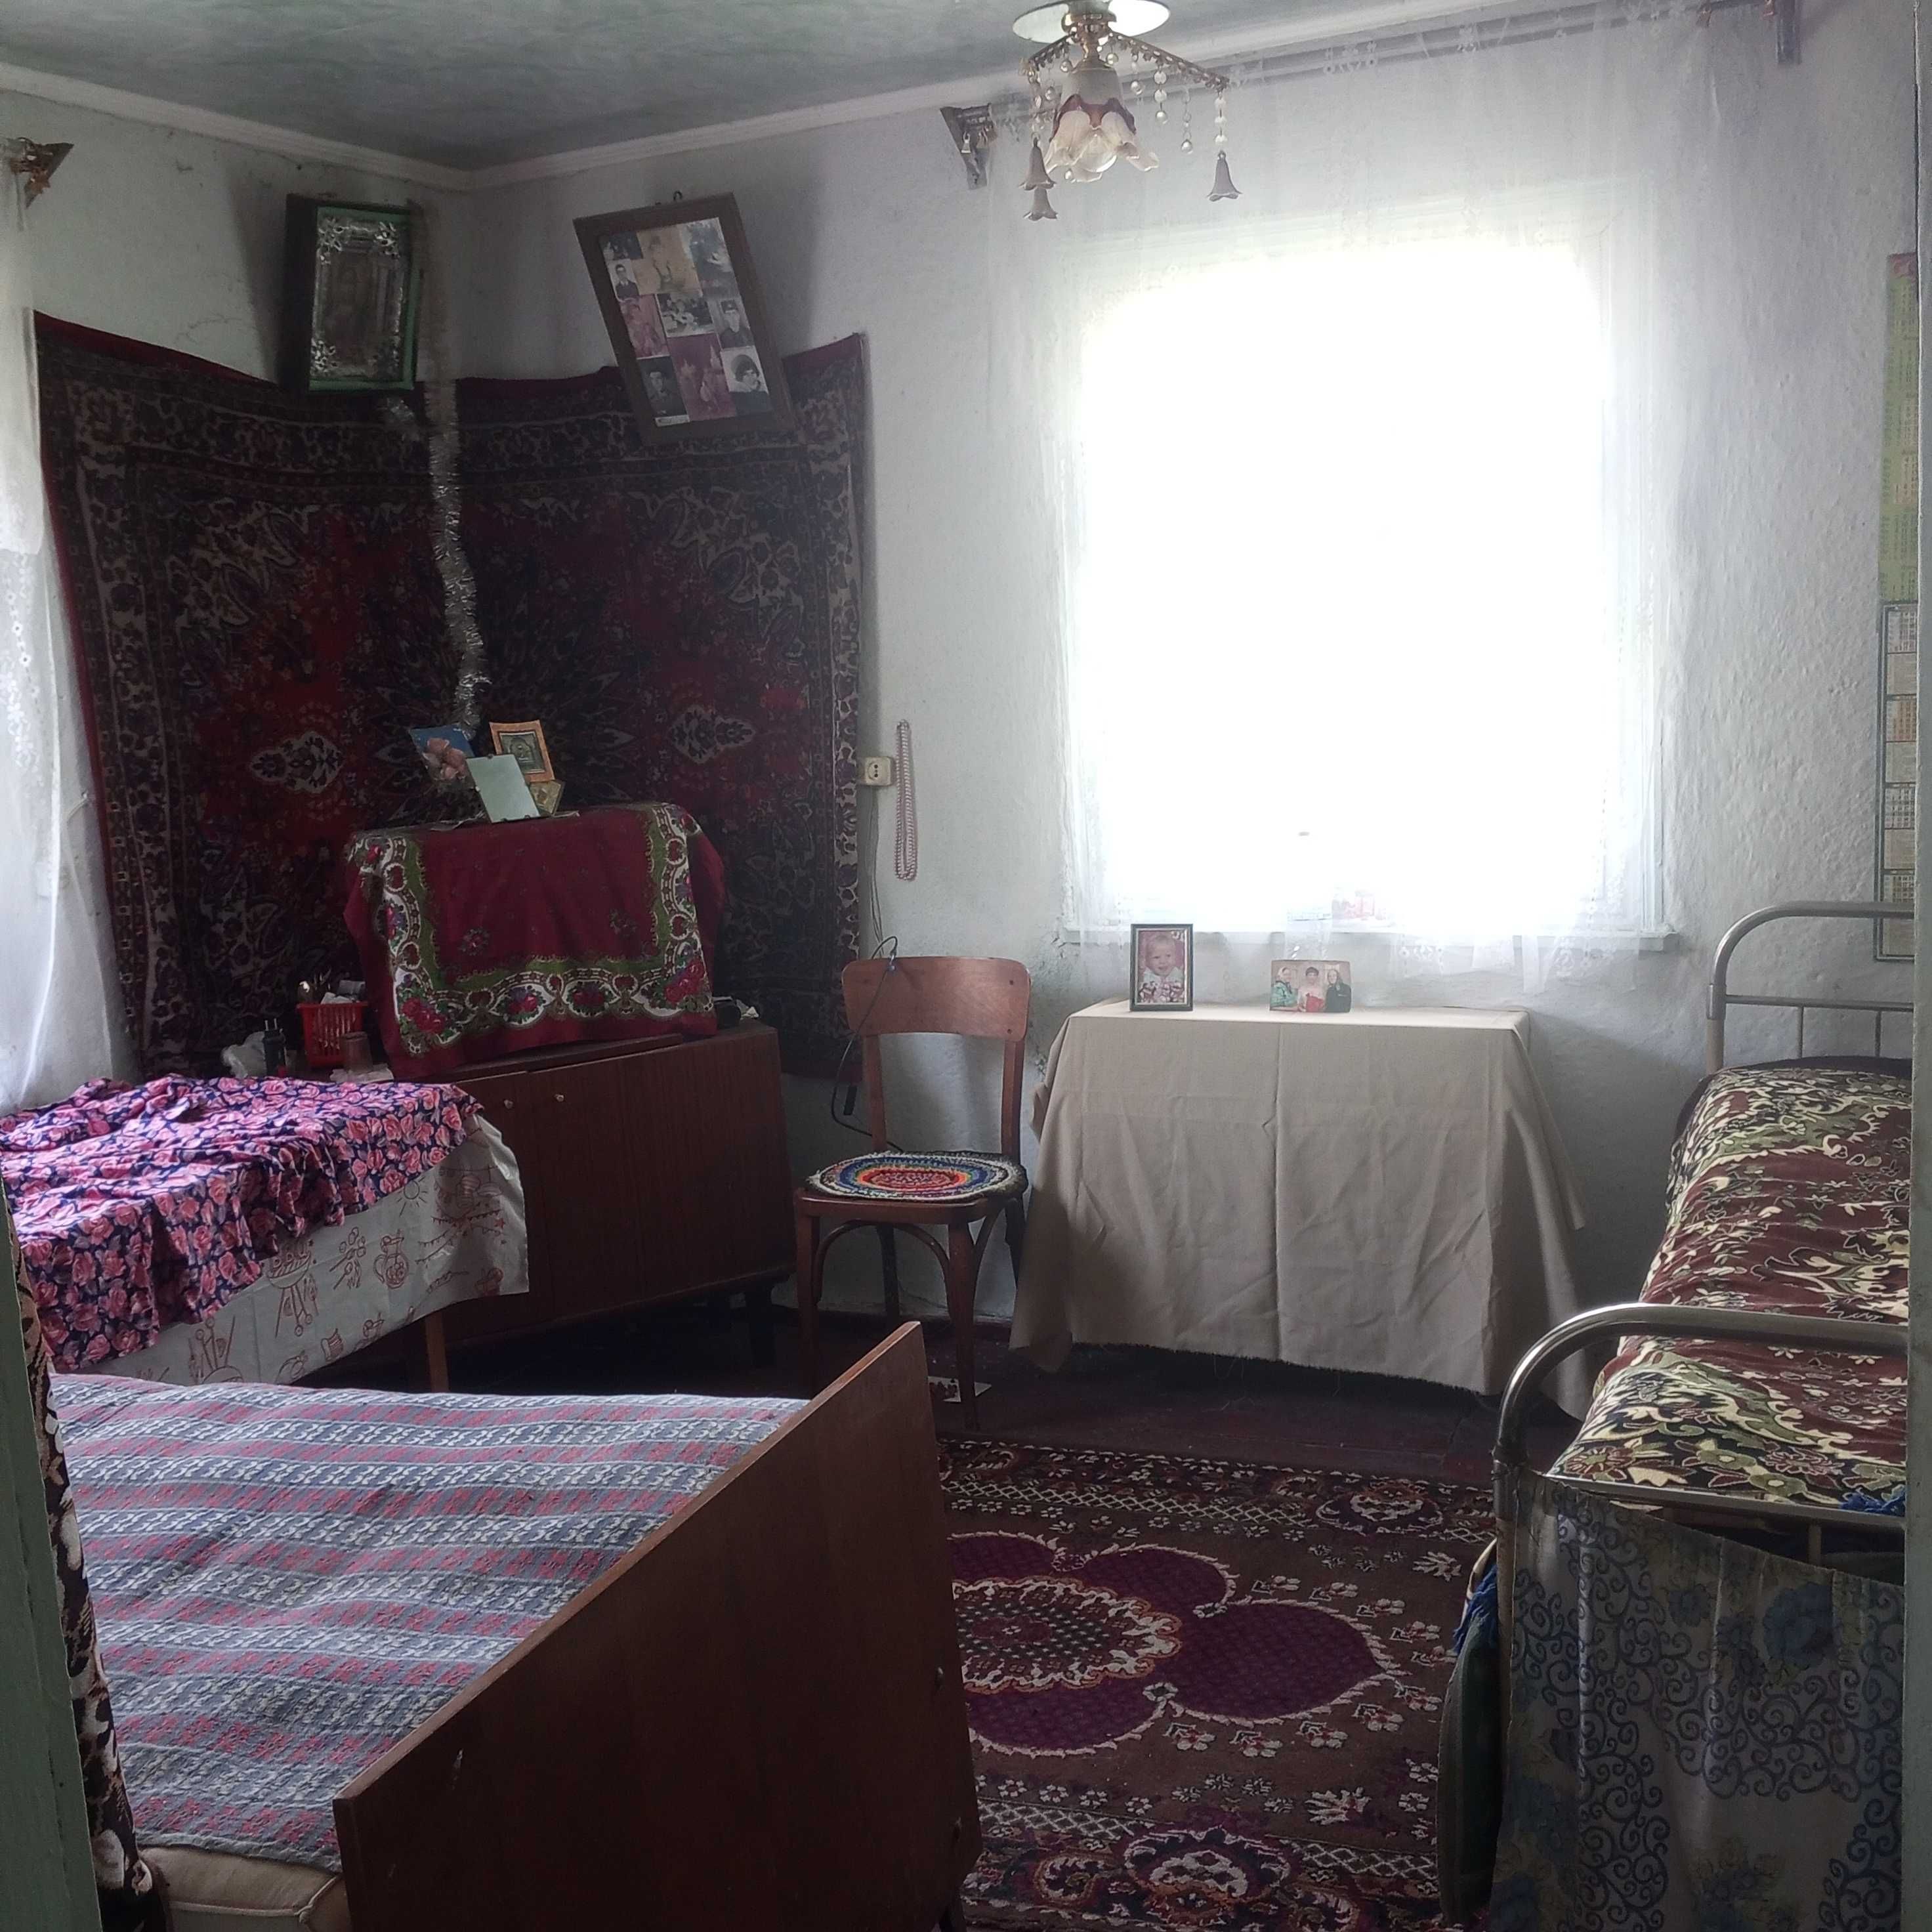 Будинок жилий, приватизований у с.Михайлівка, Тульчинського району